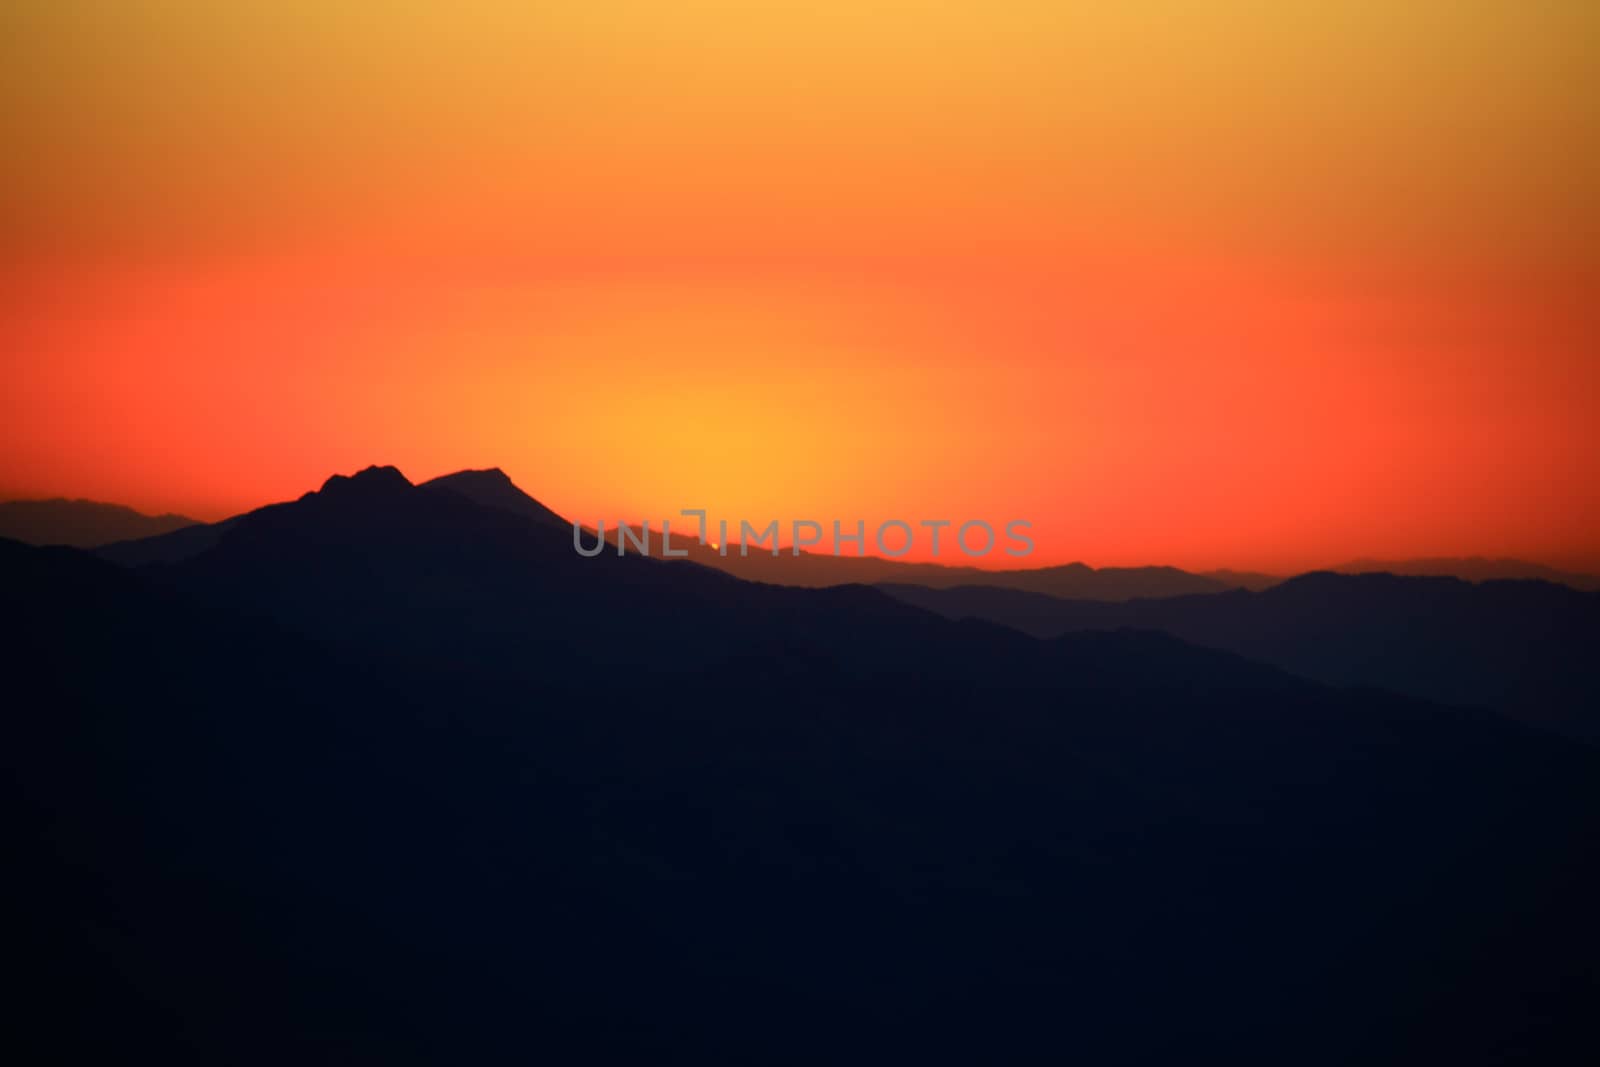 Sunrise from nemrut mountain by mturhanlar